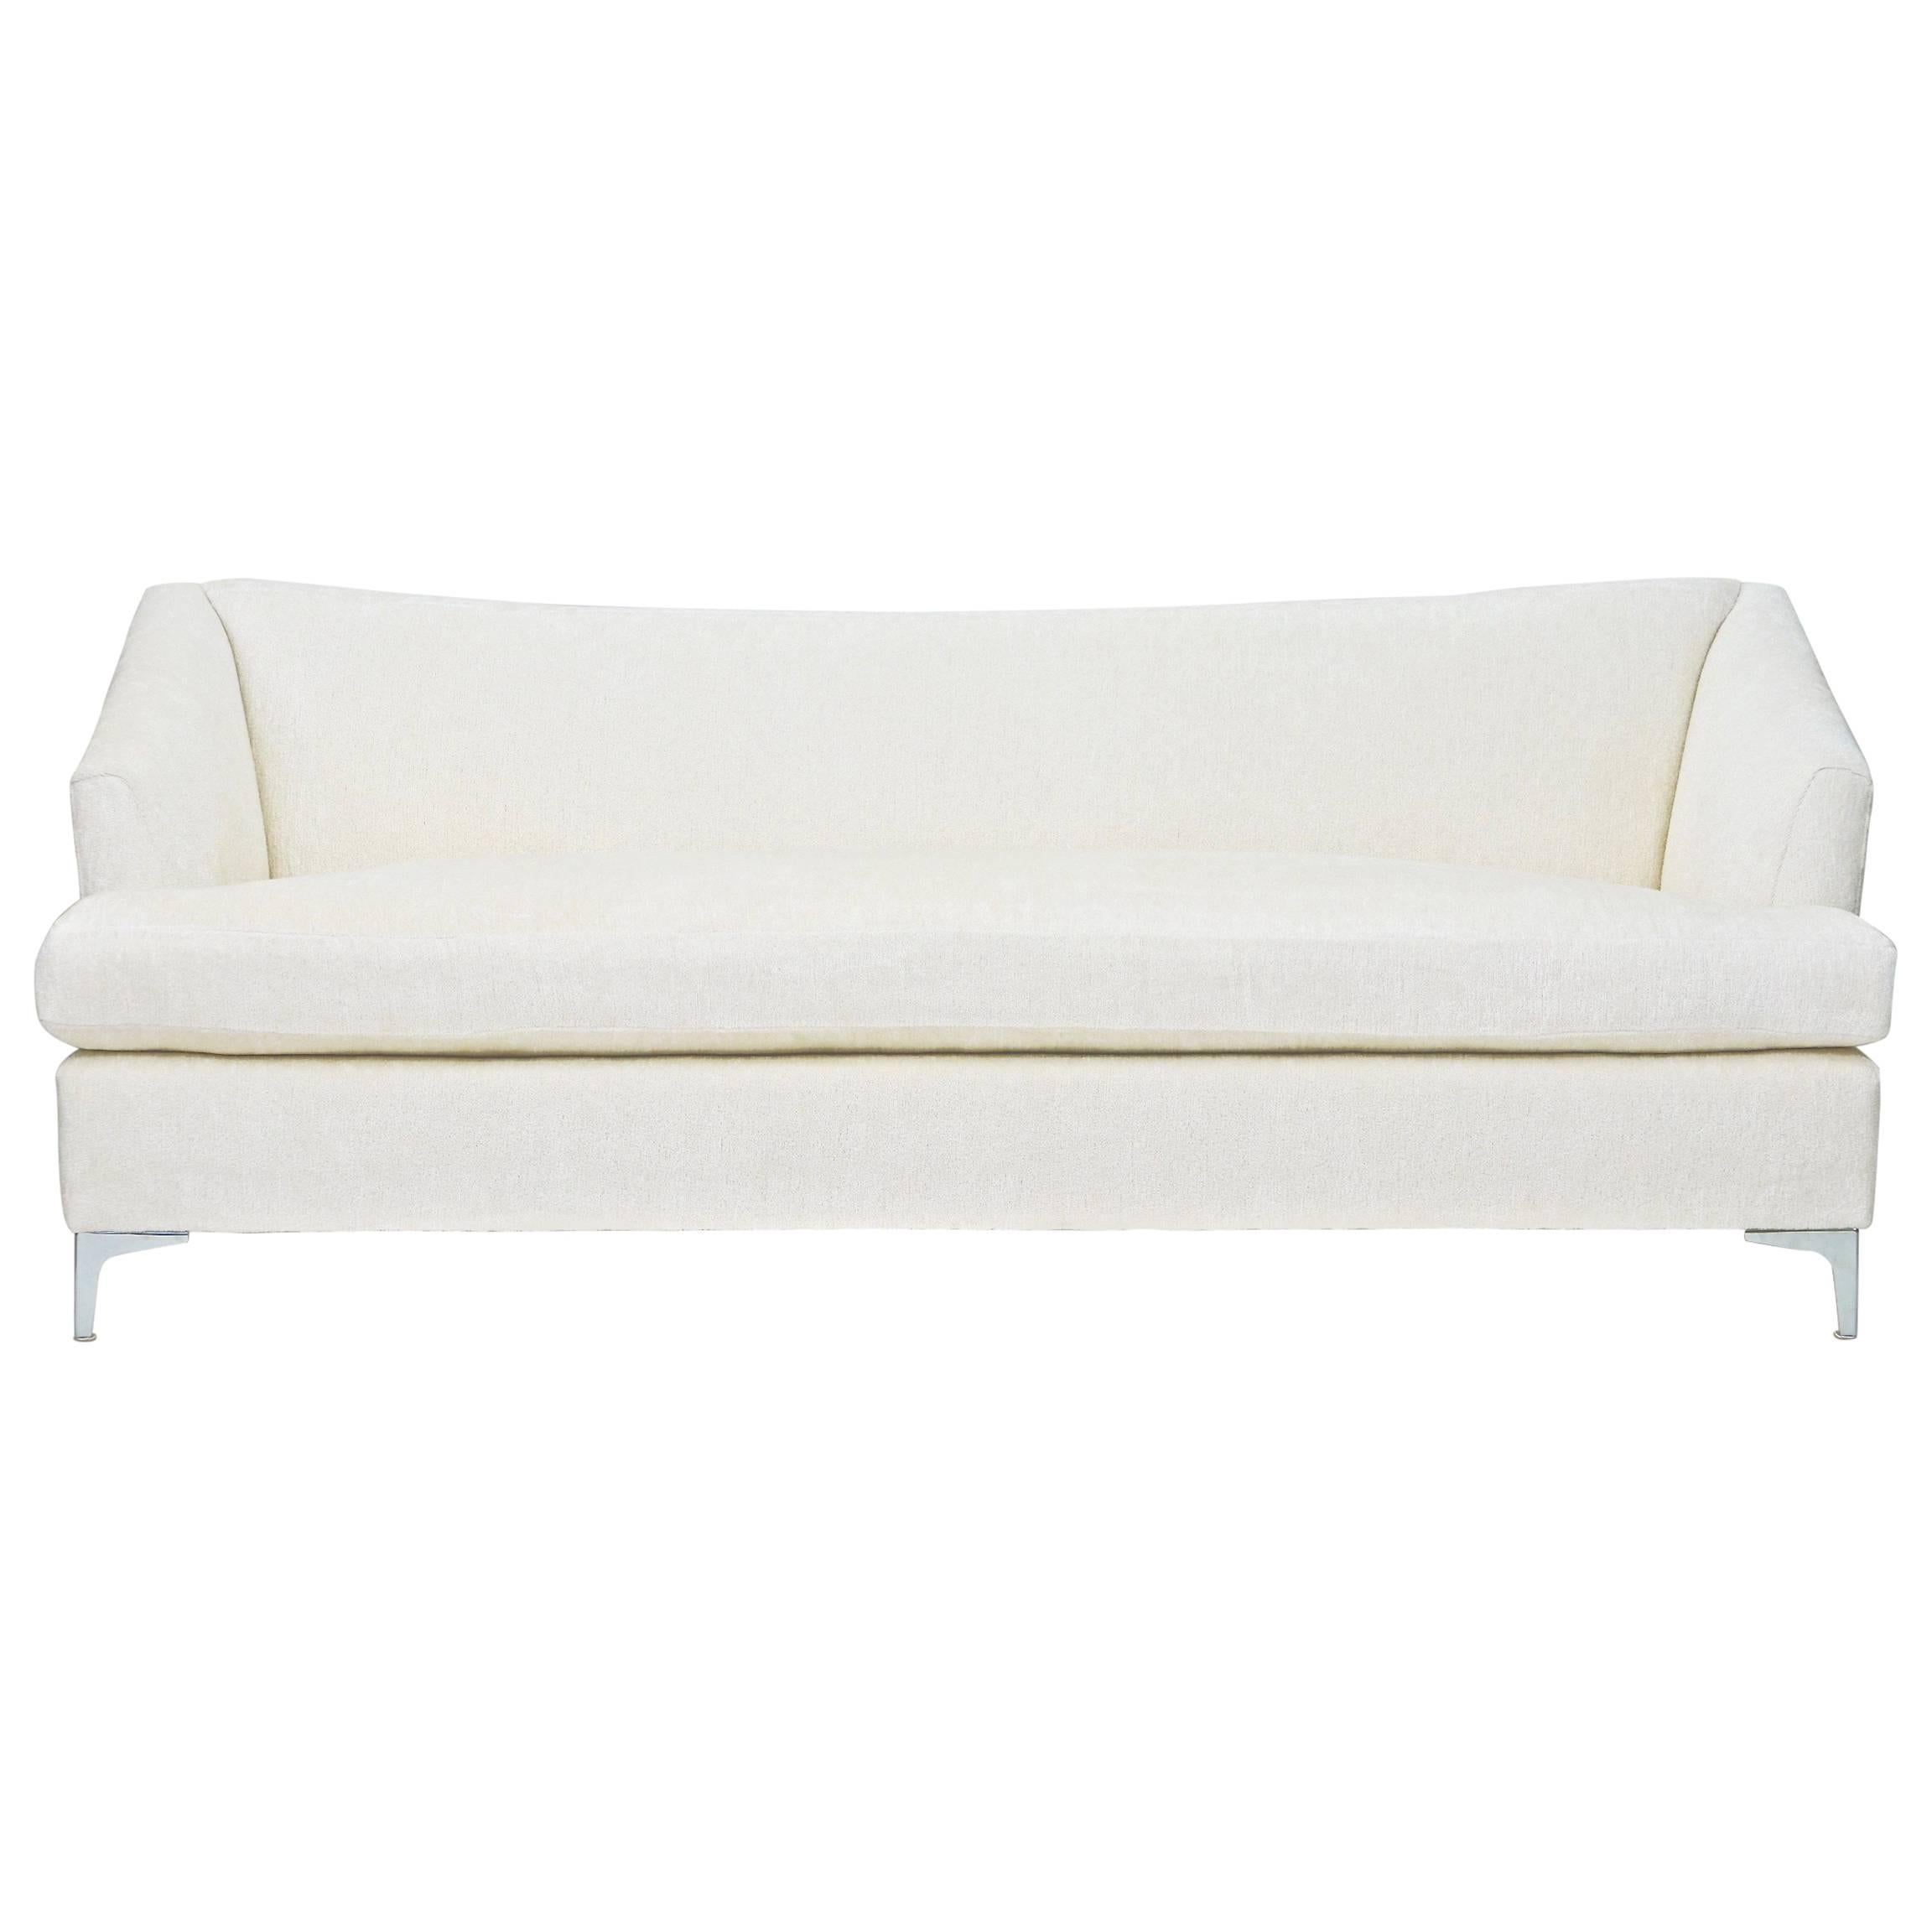 Olson Contemporary Single Cushion Sofa